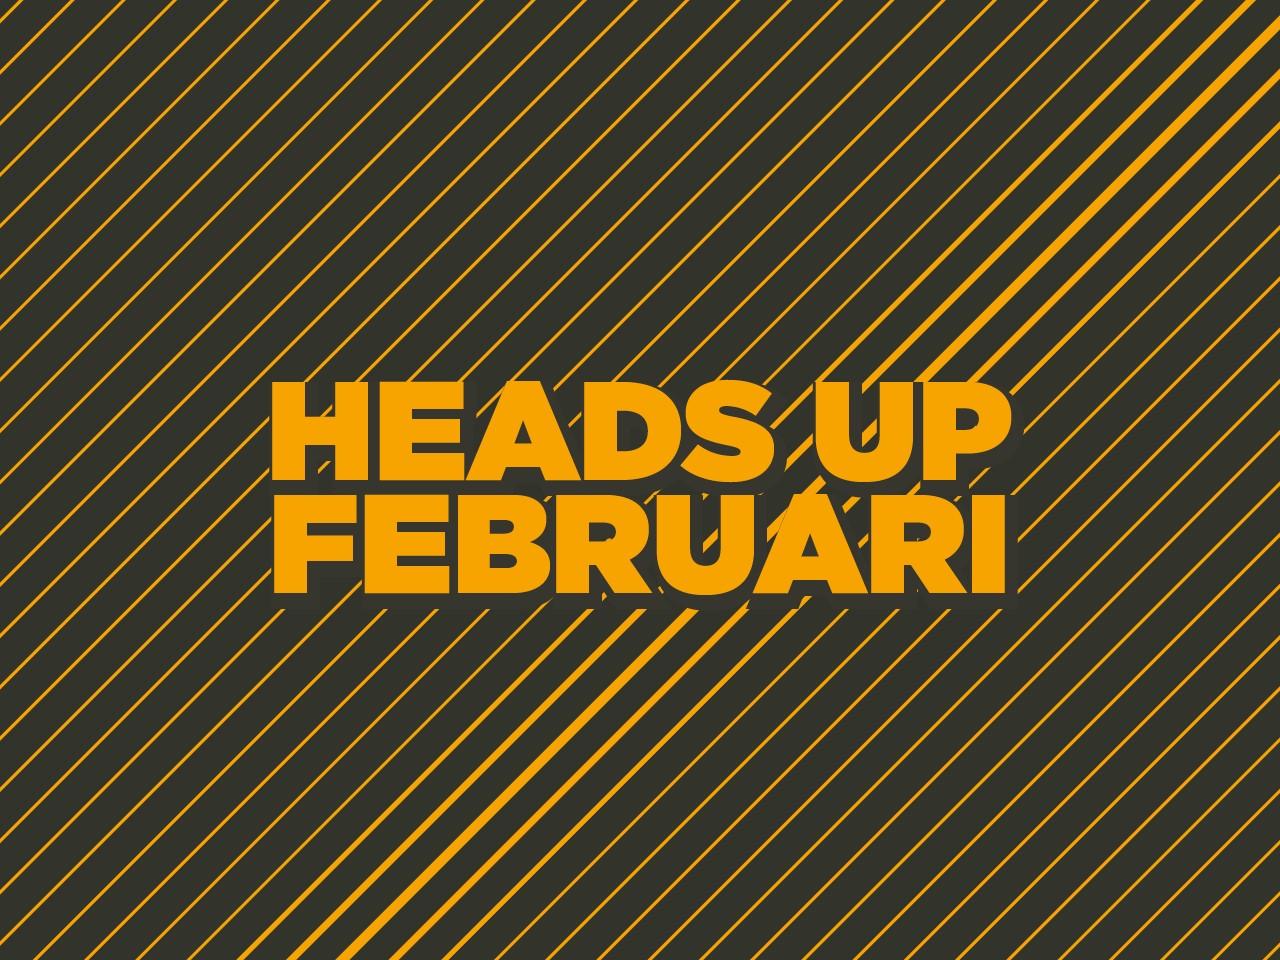 Heads up februari